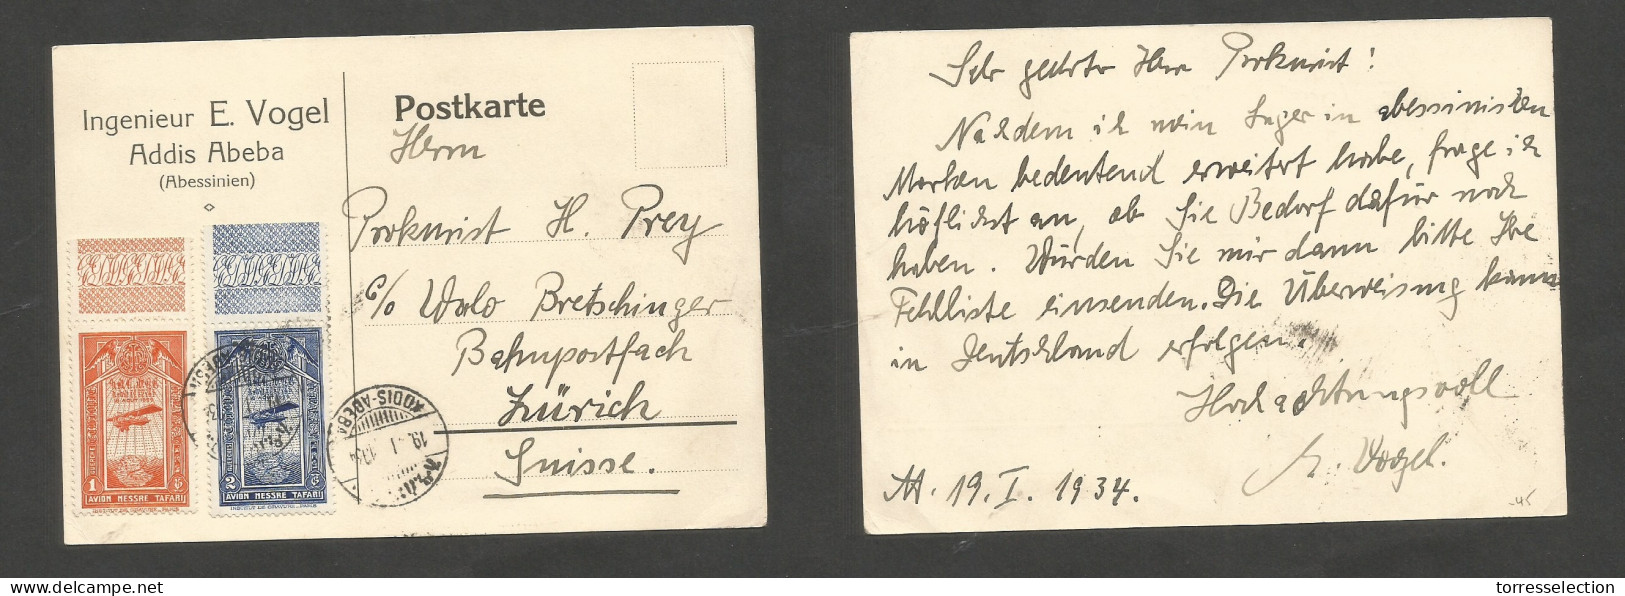 ETHIOPIA. 1934 (19 Jan) Addis Abeba - Switzerland, Zurich. Multifkd Private Card. Air Usage, Margin, Borders. XF. - Ethiopie